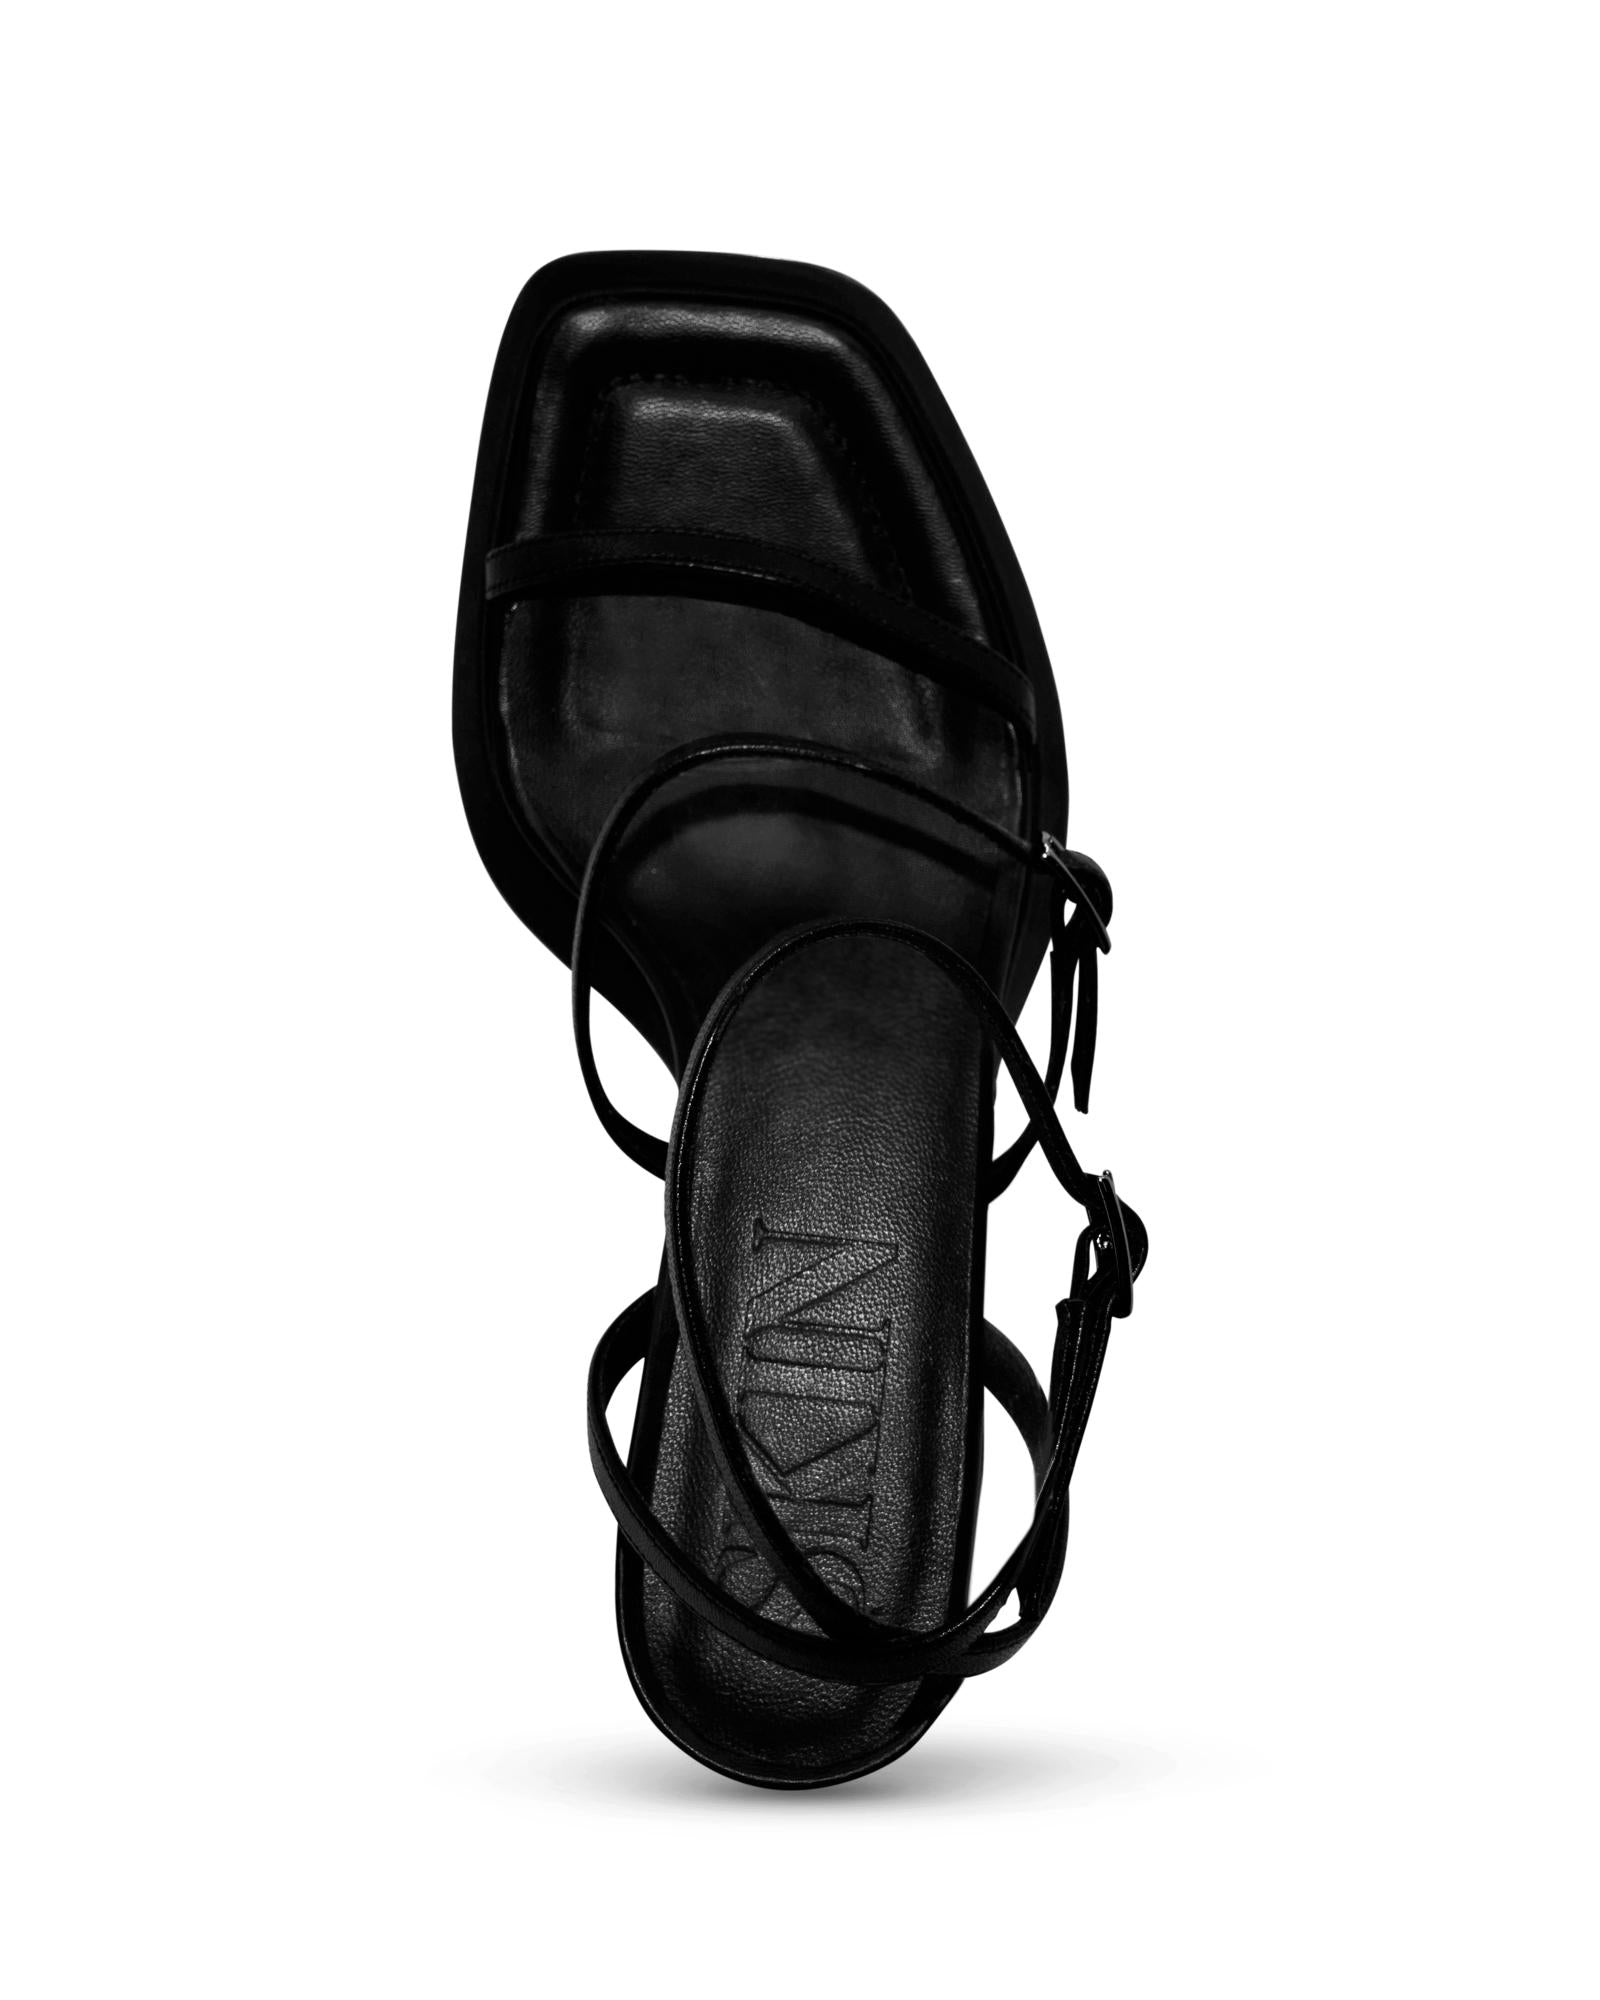 Salerno Black 9cm Platform Heel